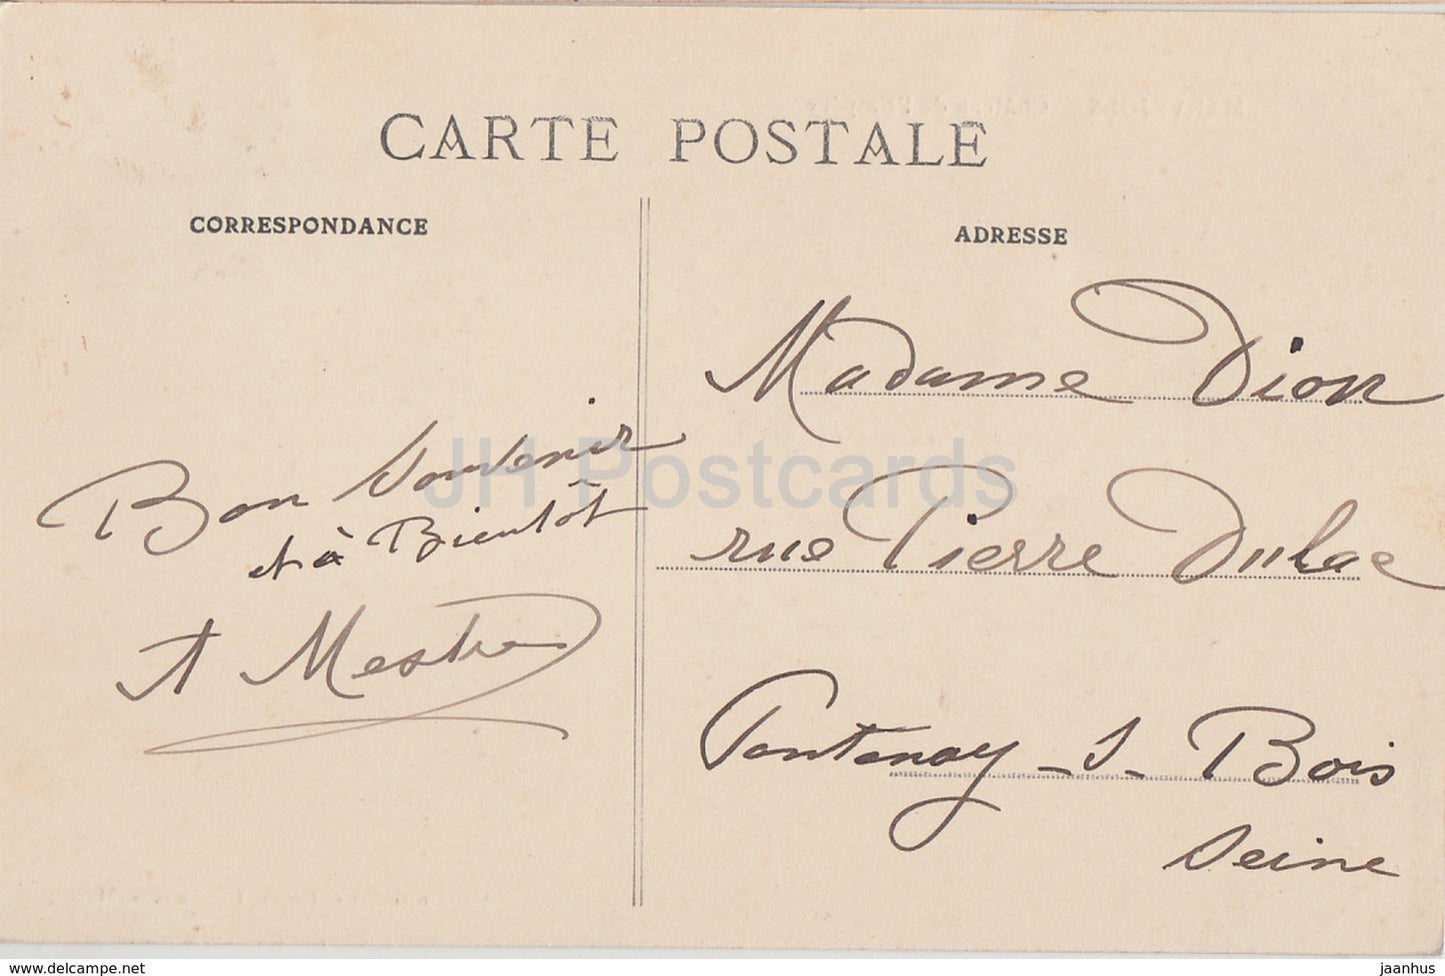 Marvejols - Chateau de l'Empery - Schloss - alte Postkarte - Frankreich - gebraucht